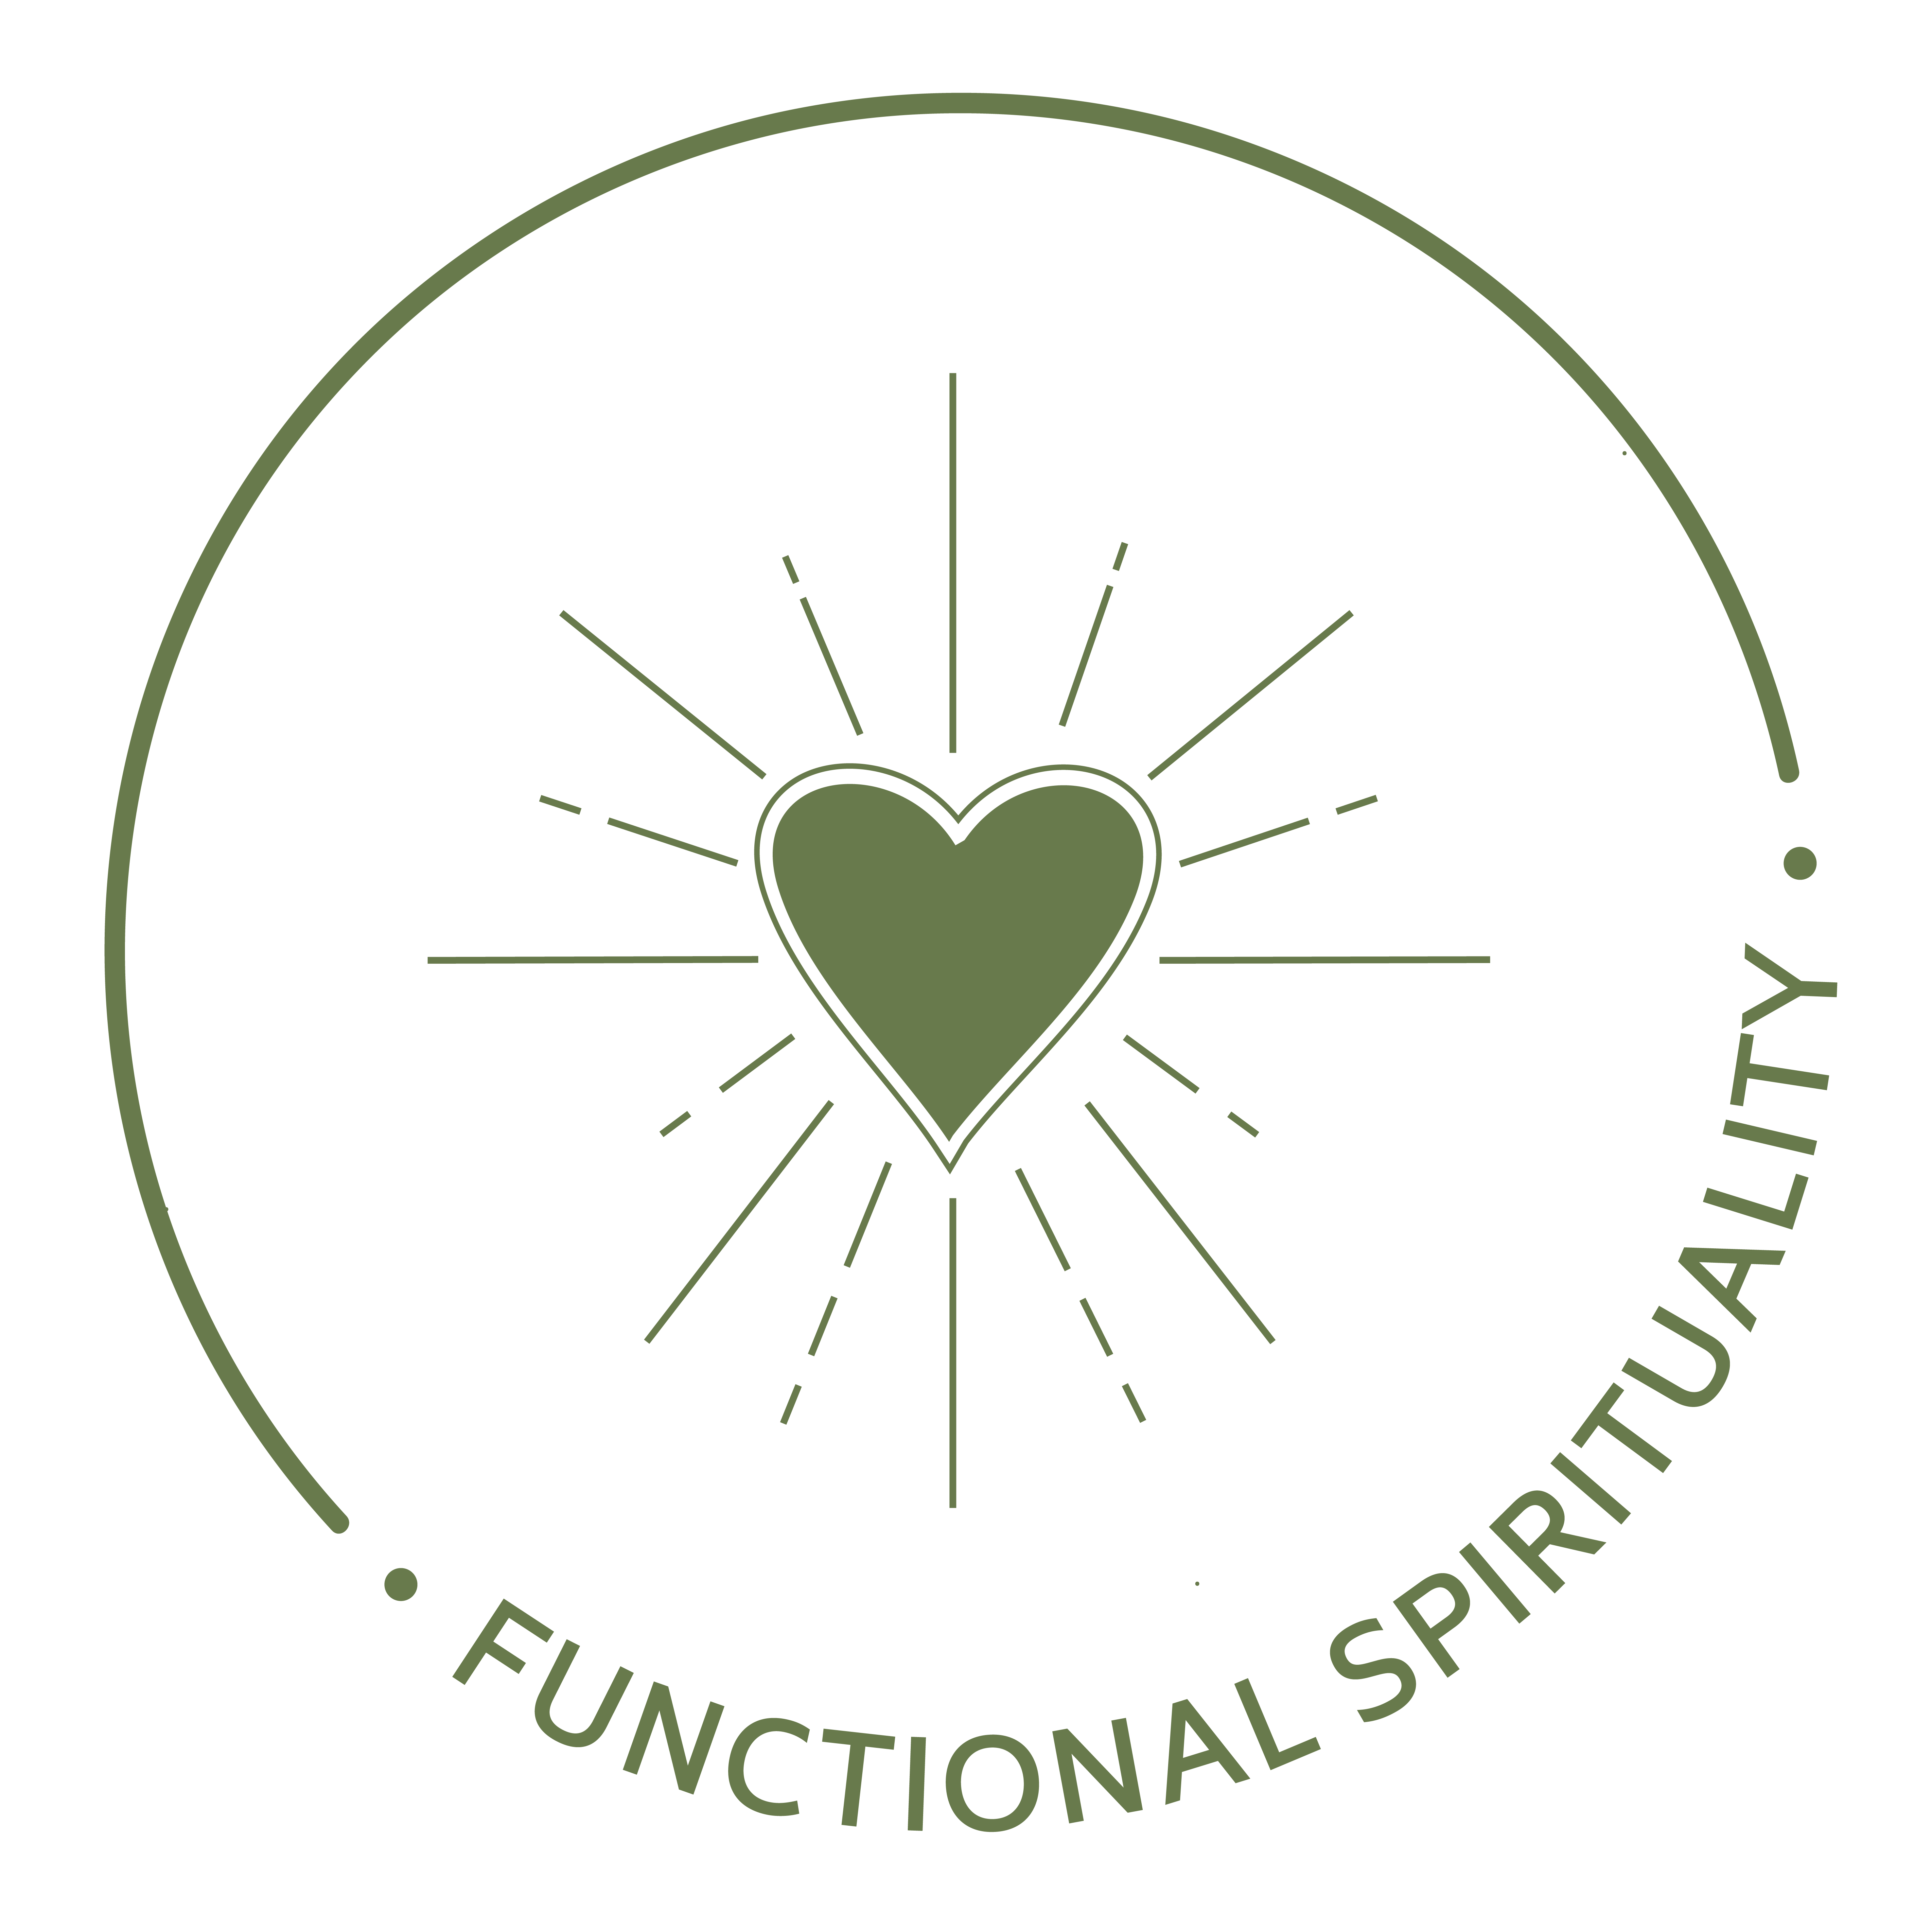 Functional Spirituality